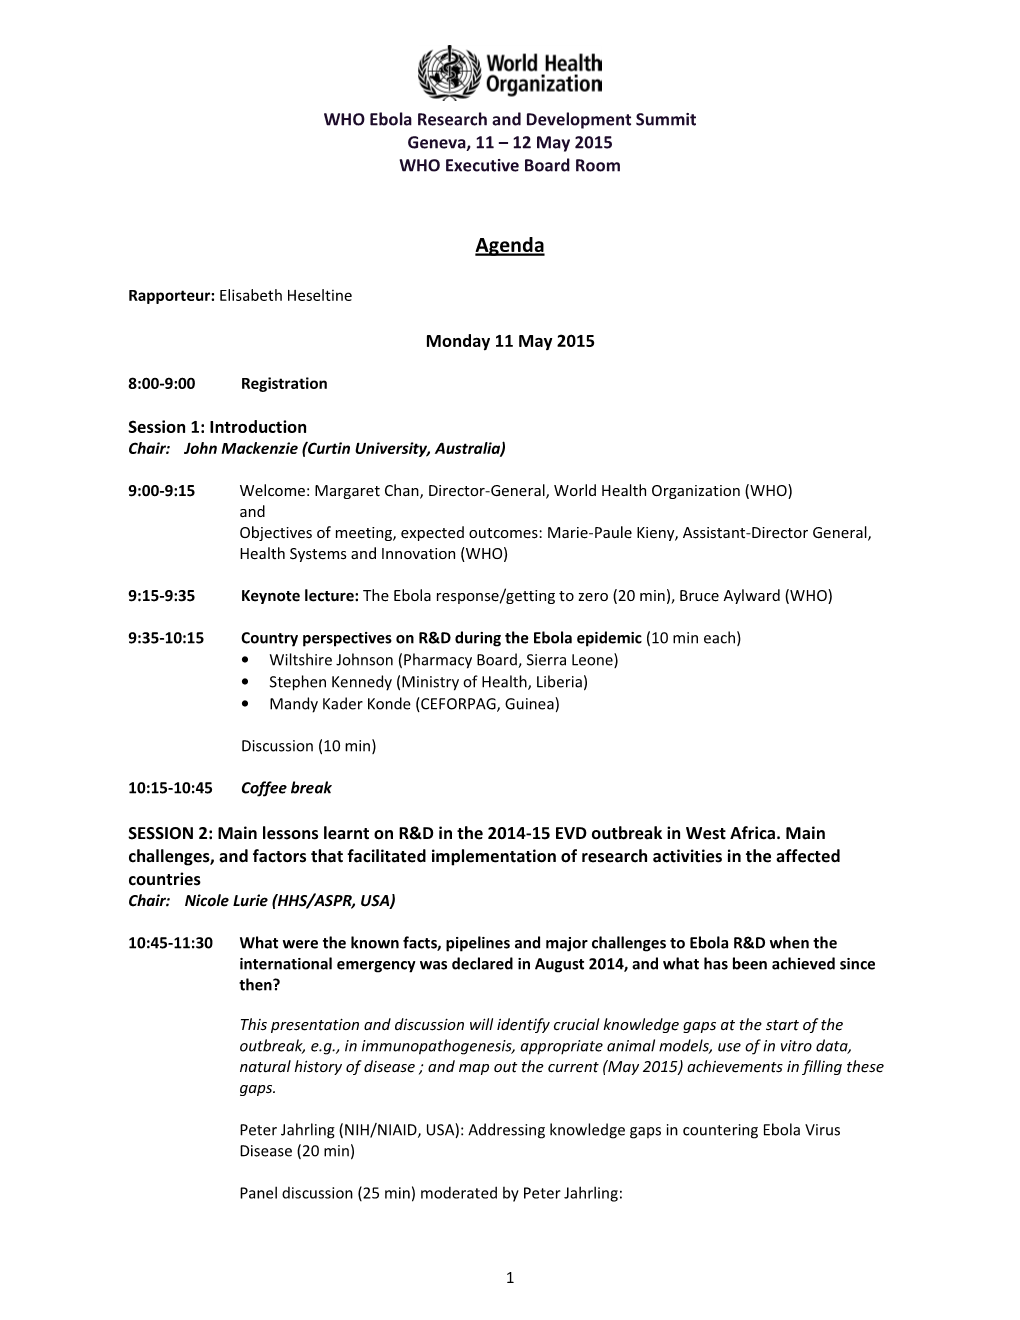 Agenda, WHO Ebola Research and Development Summit